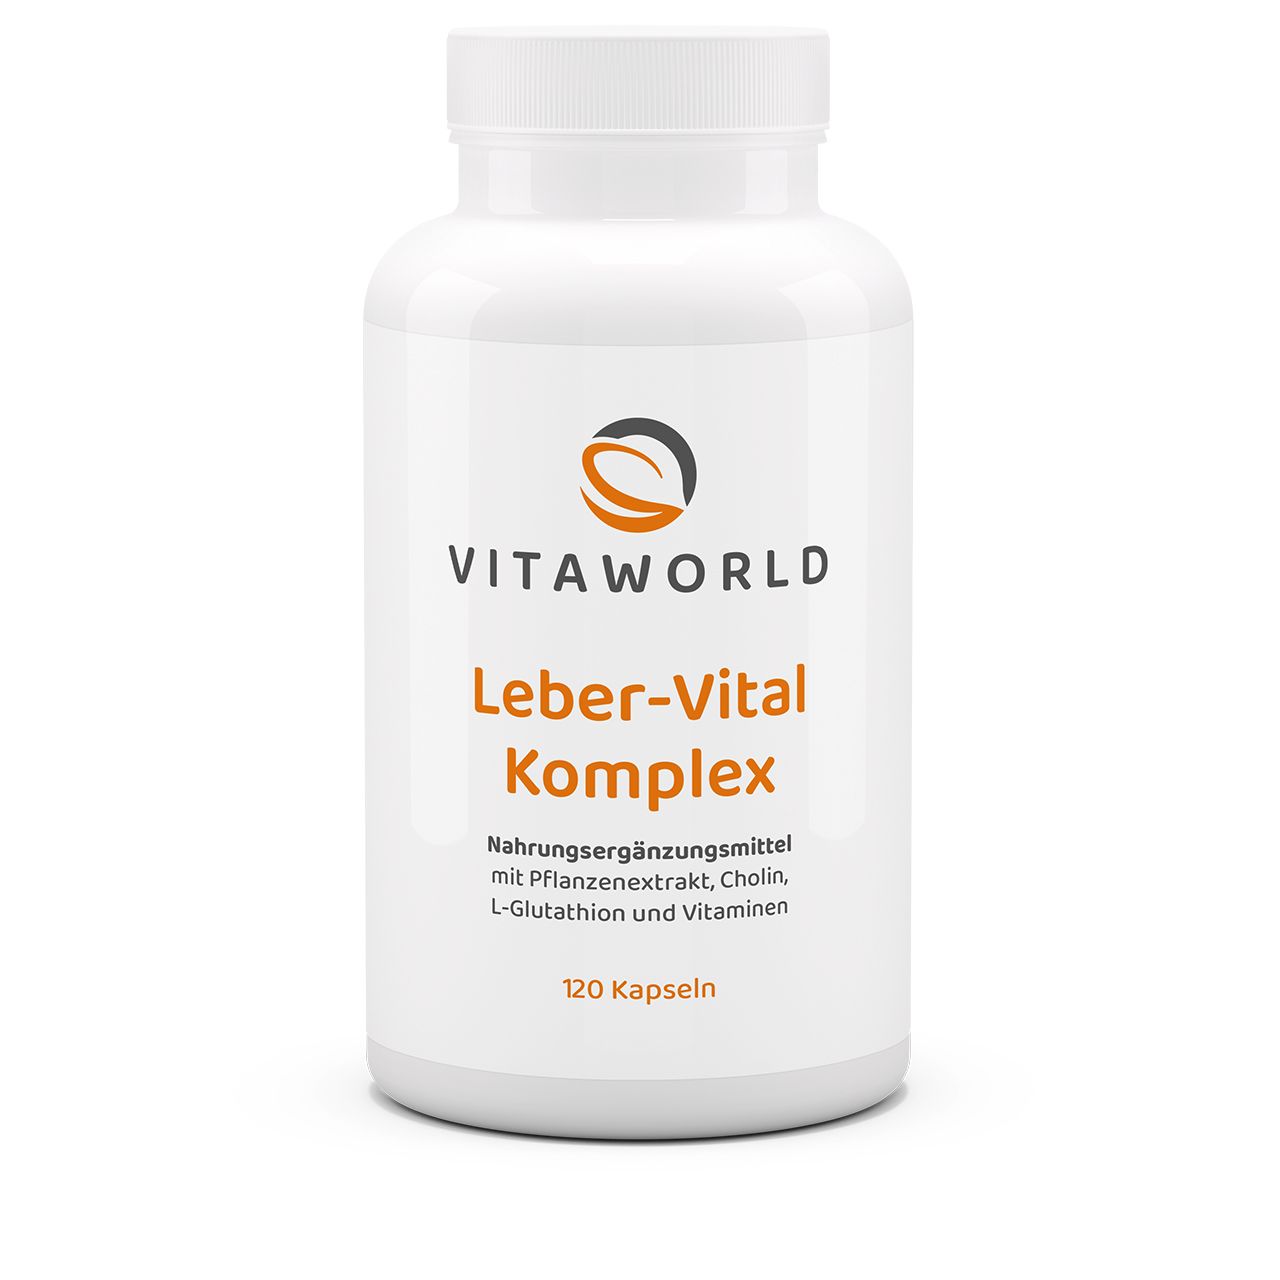 Vita World Leber-Vital Komplex | 120 Kapseln | mit Cholin, Mariendistel Extrakt und Silymarin | vegan | gluten- und laktosefrei